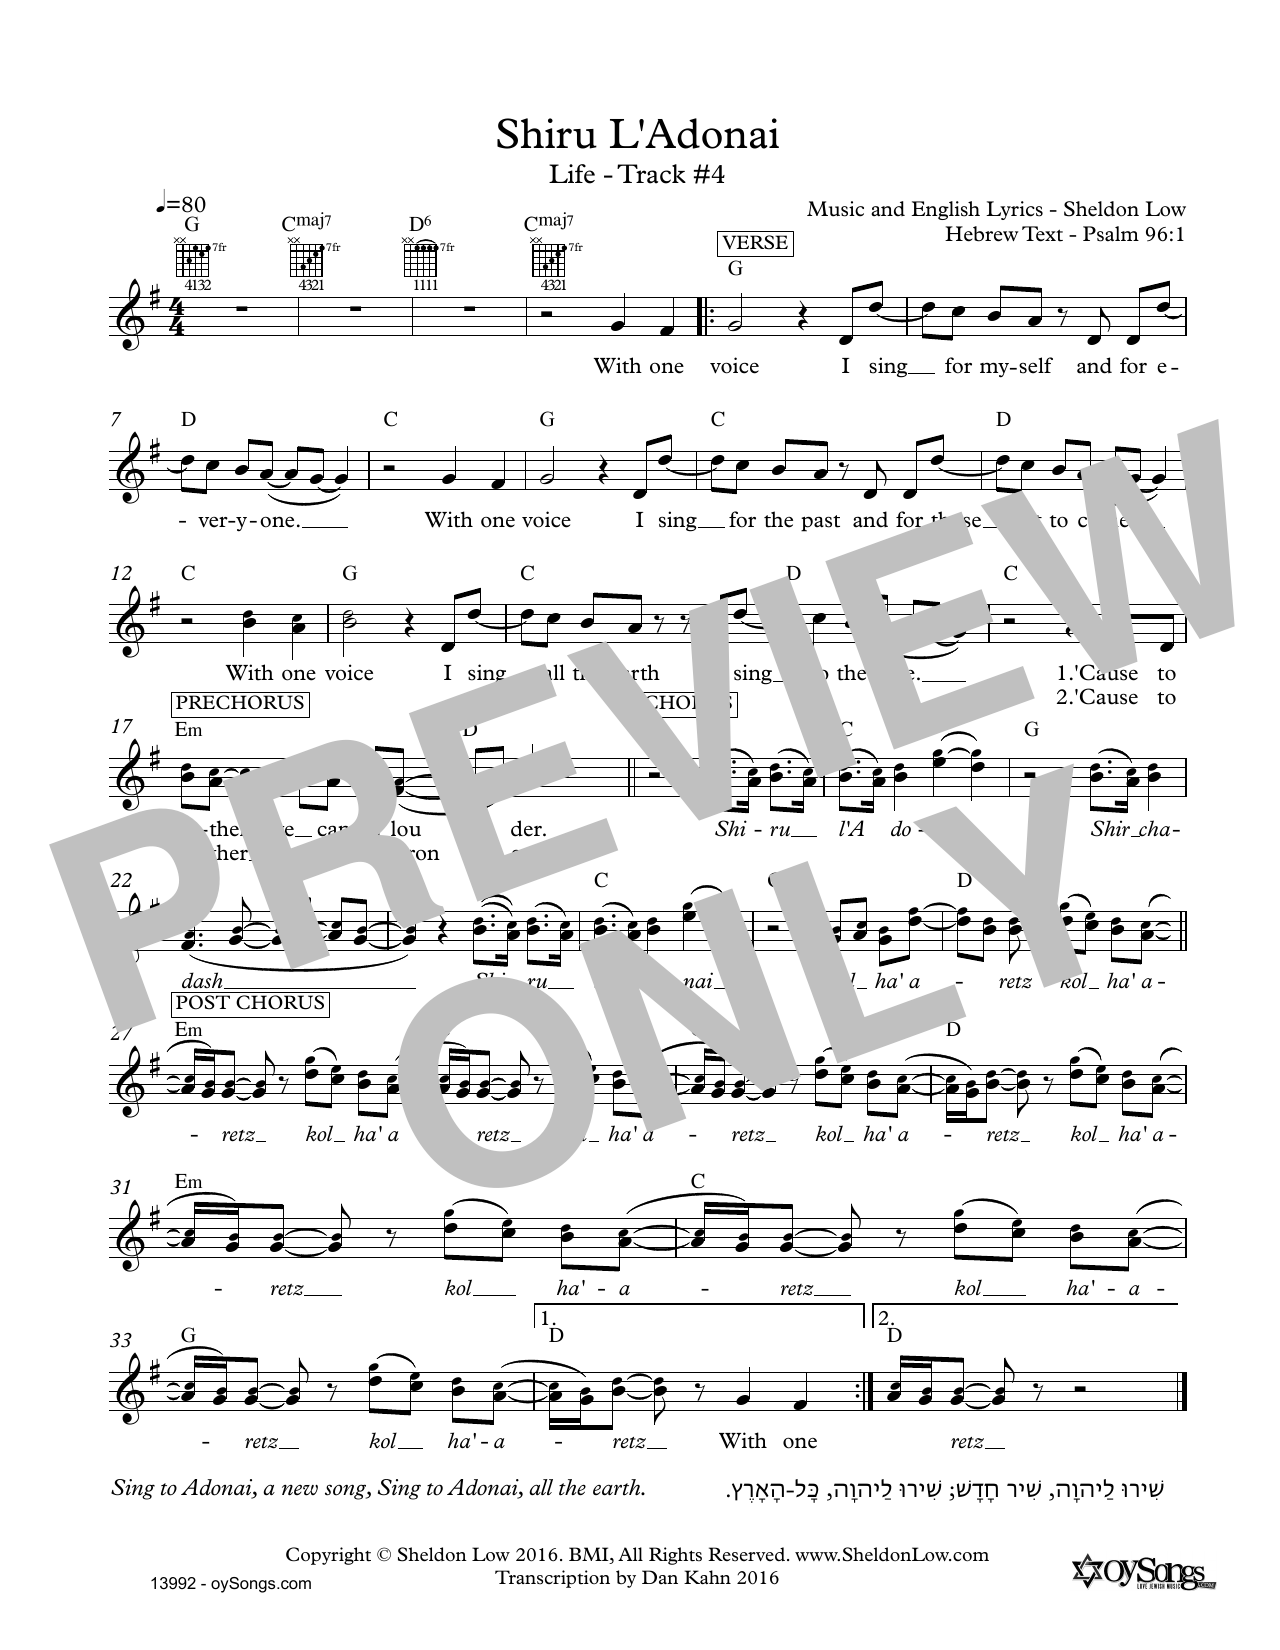 Download Sheldon Low Shiru L'adonai Sheet Music and learn how to play Lead Sheet / Fake Book PDF digital score in minutes